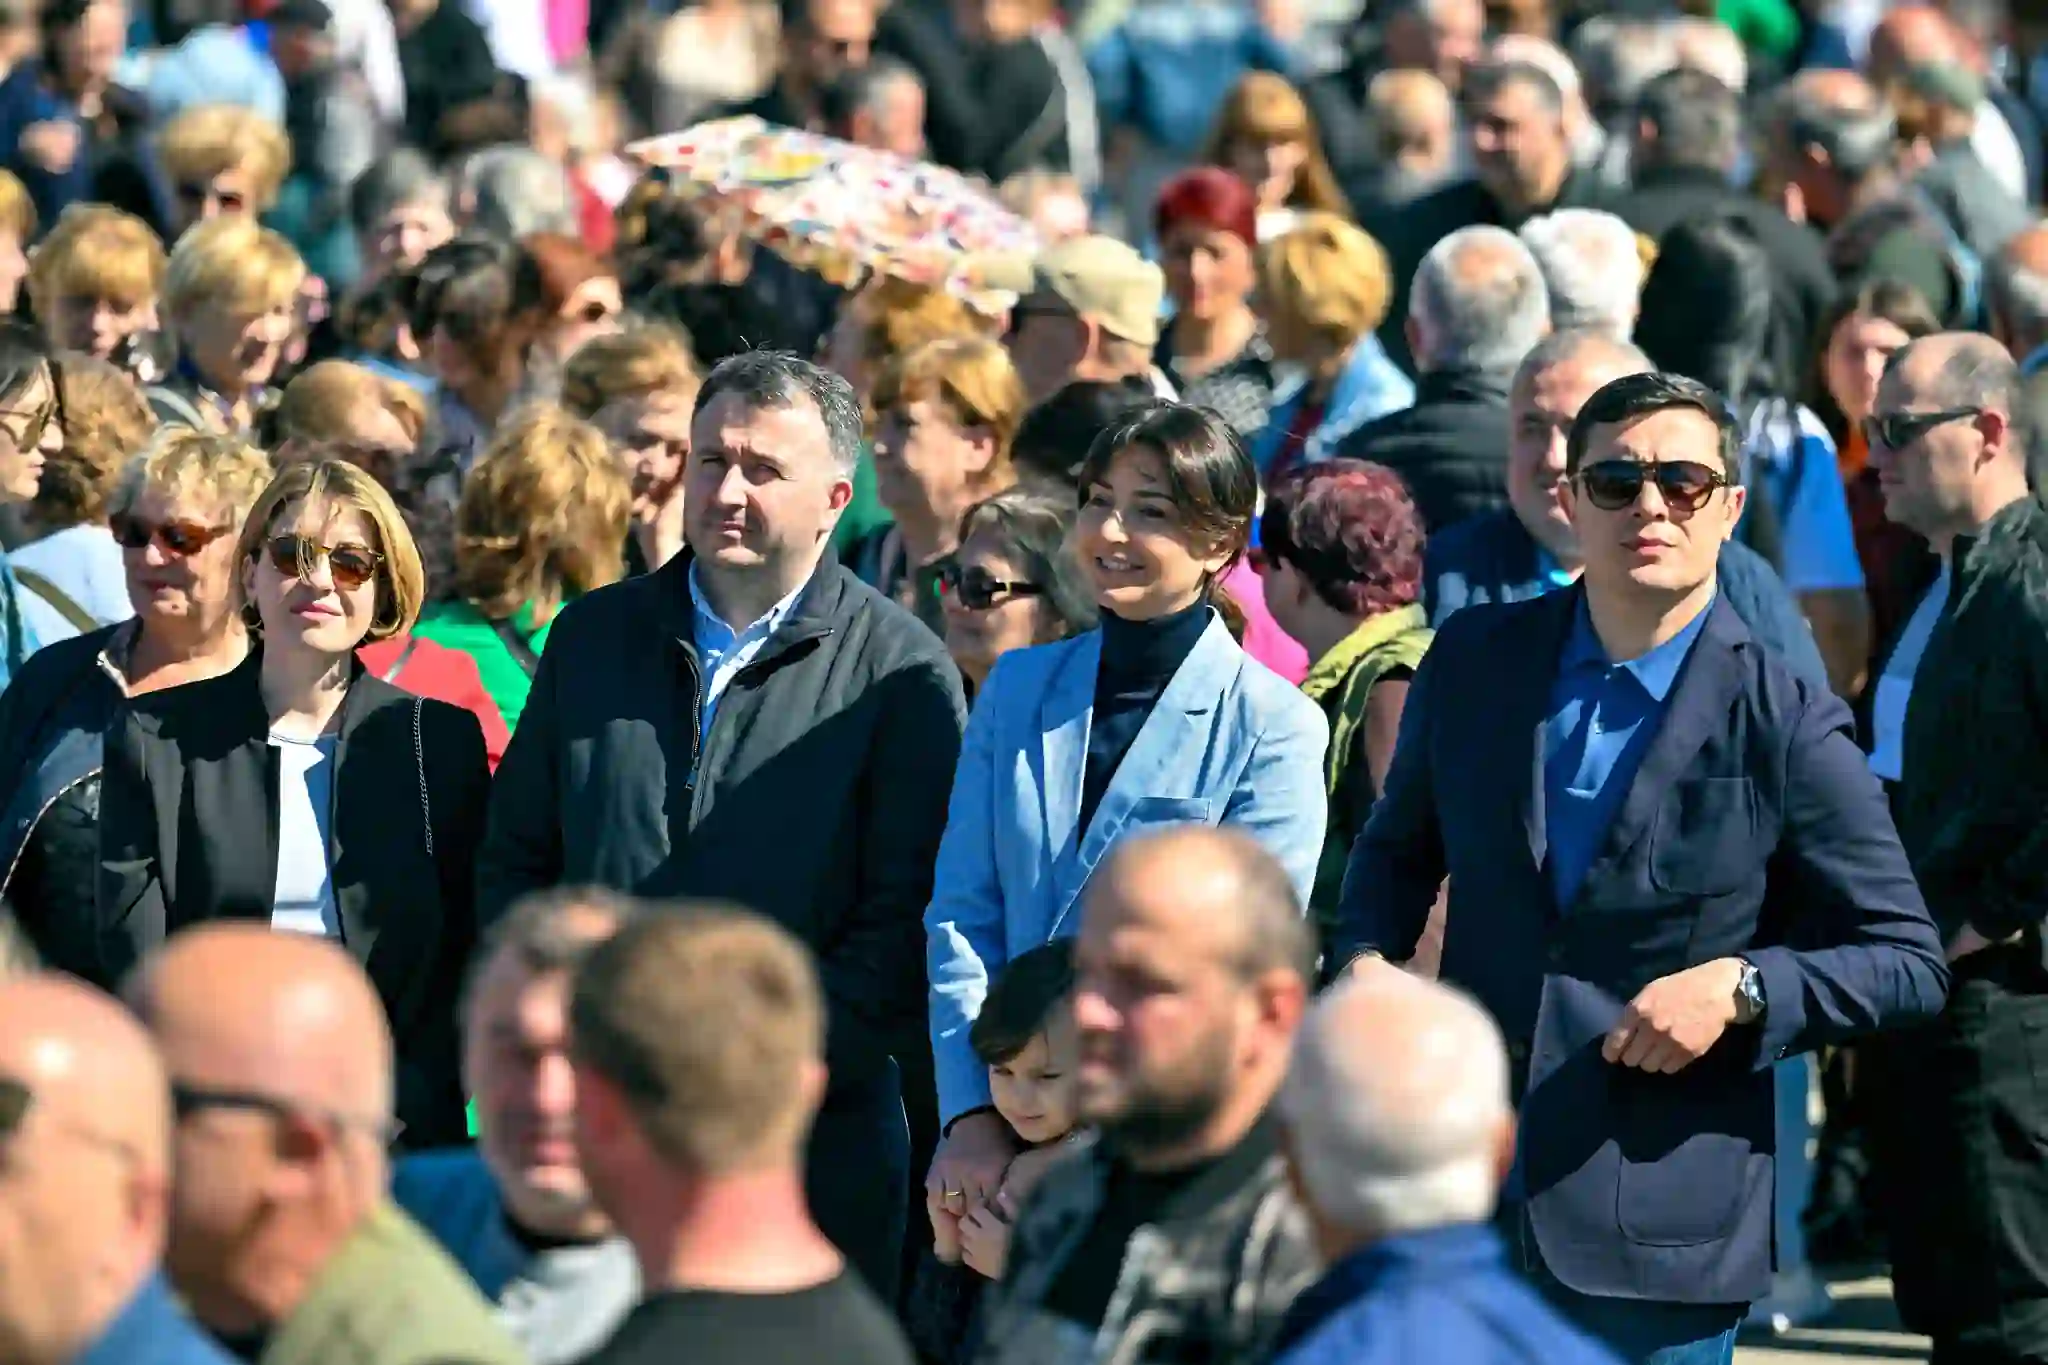 Rustvai: Mayor attends a holy family rally credit: Facebook/Rustavi Mayor Nino